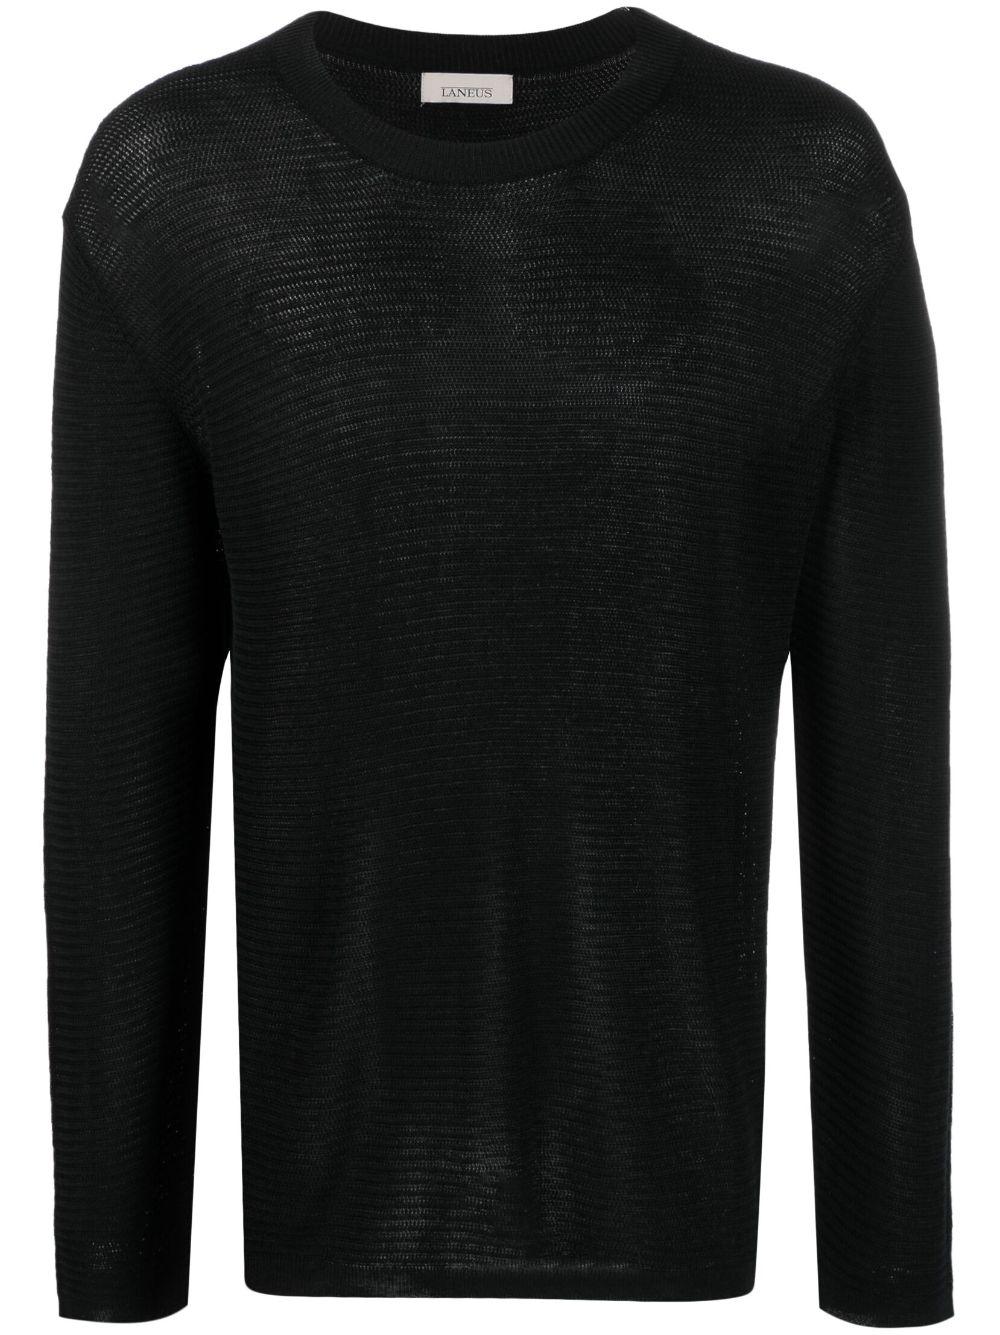 Laneus long-sleeve knit sweater - Black von Laneus